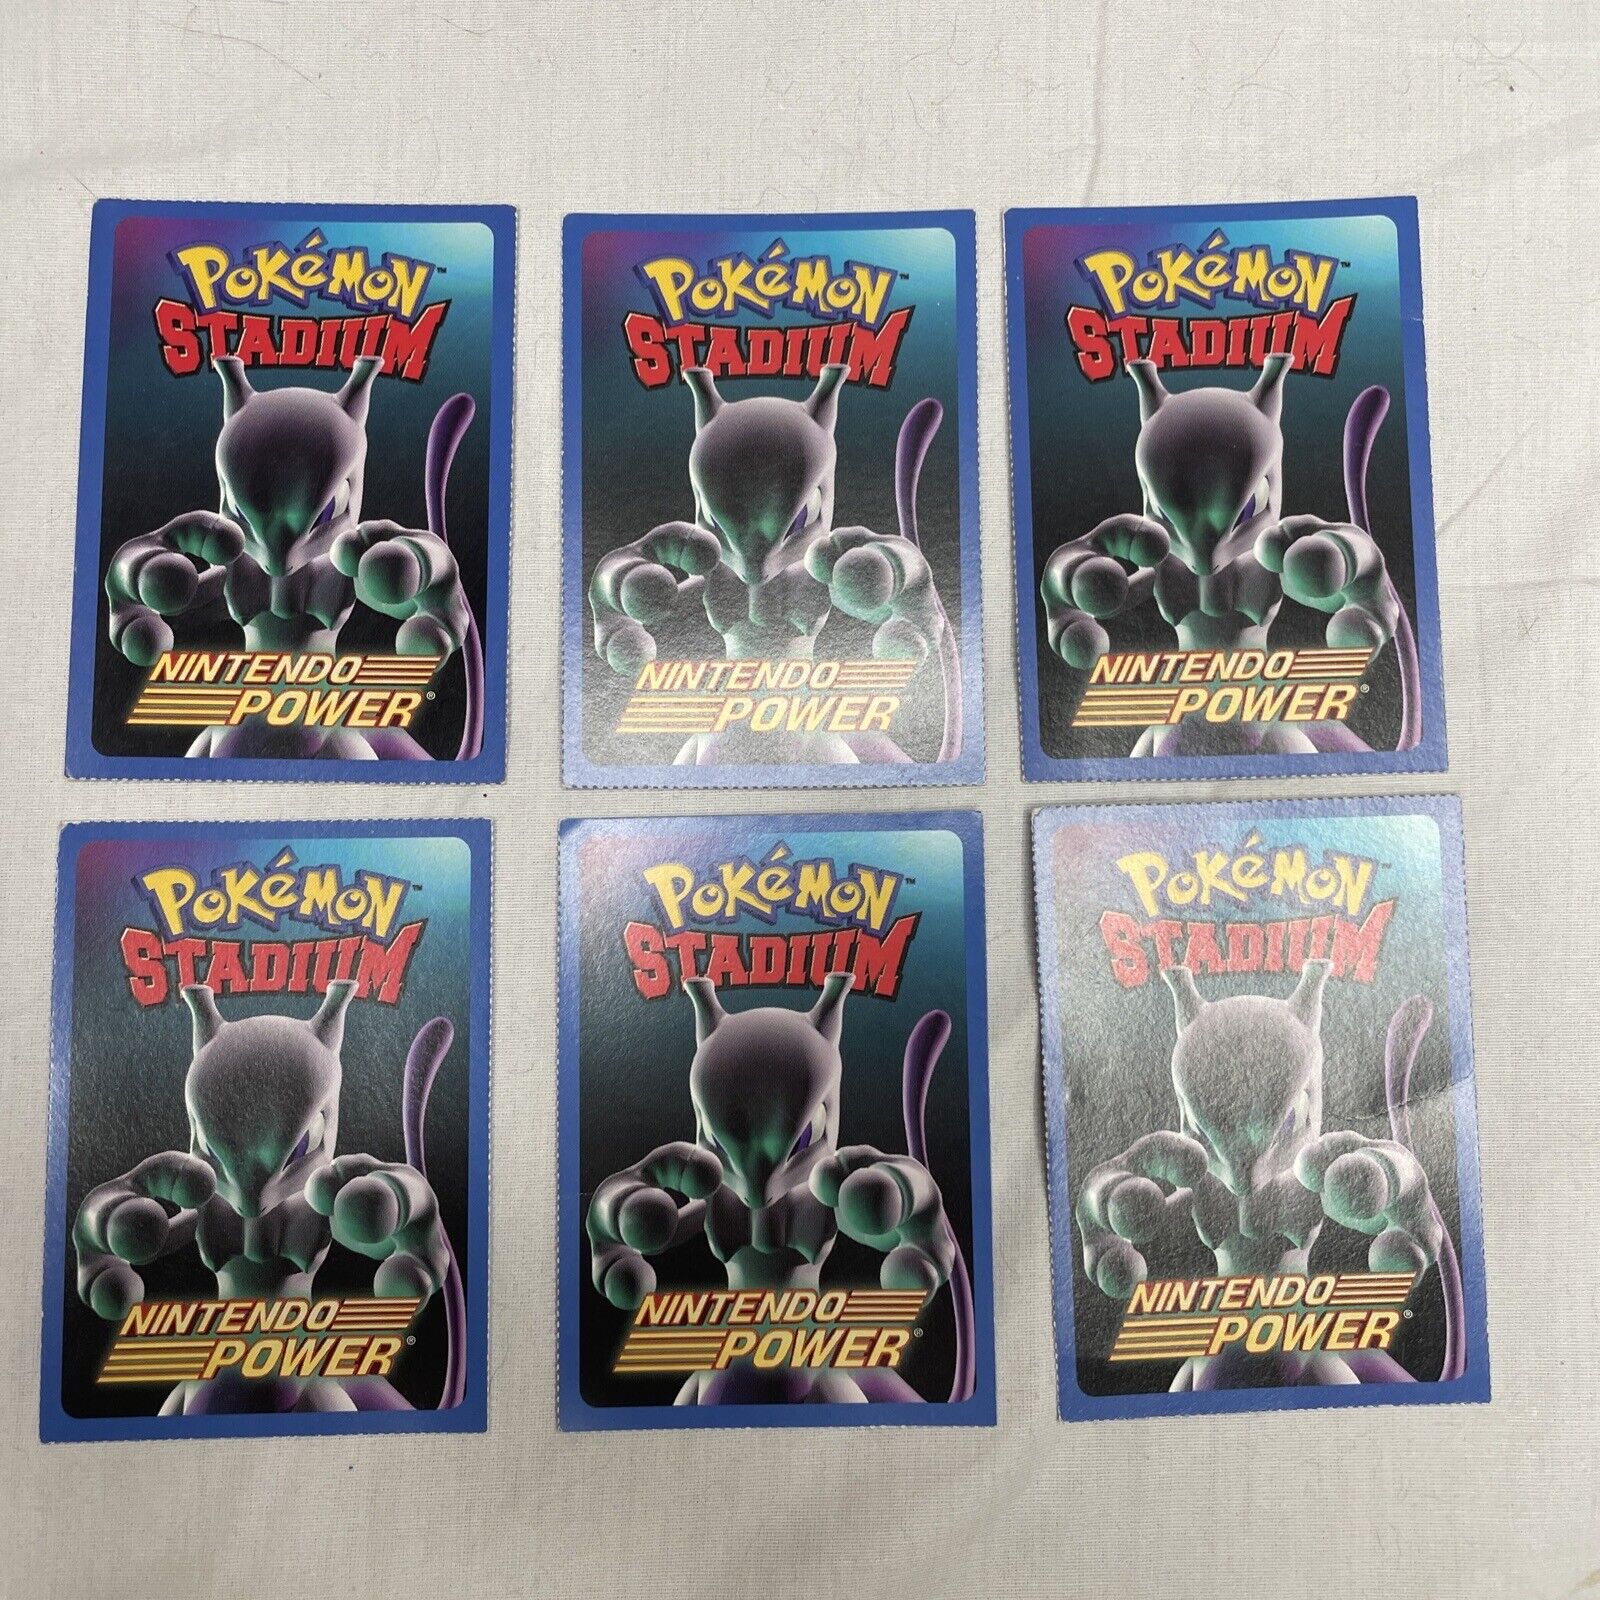  Pokemon Stadium Nintendo 64 N64 Blockbuster Nintendo Power Trading Cards Set